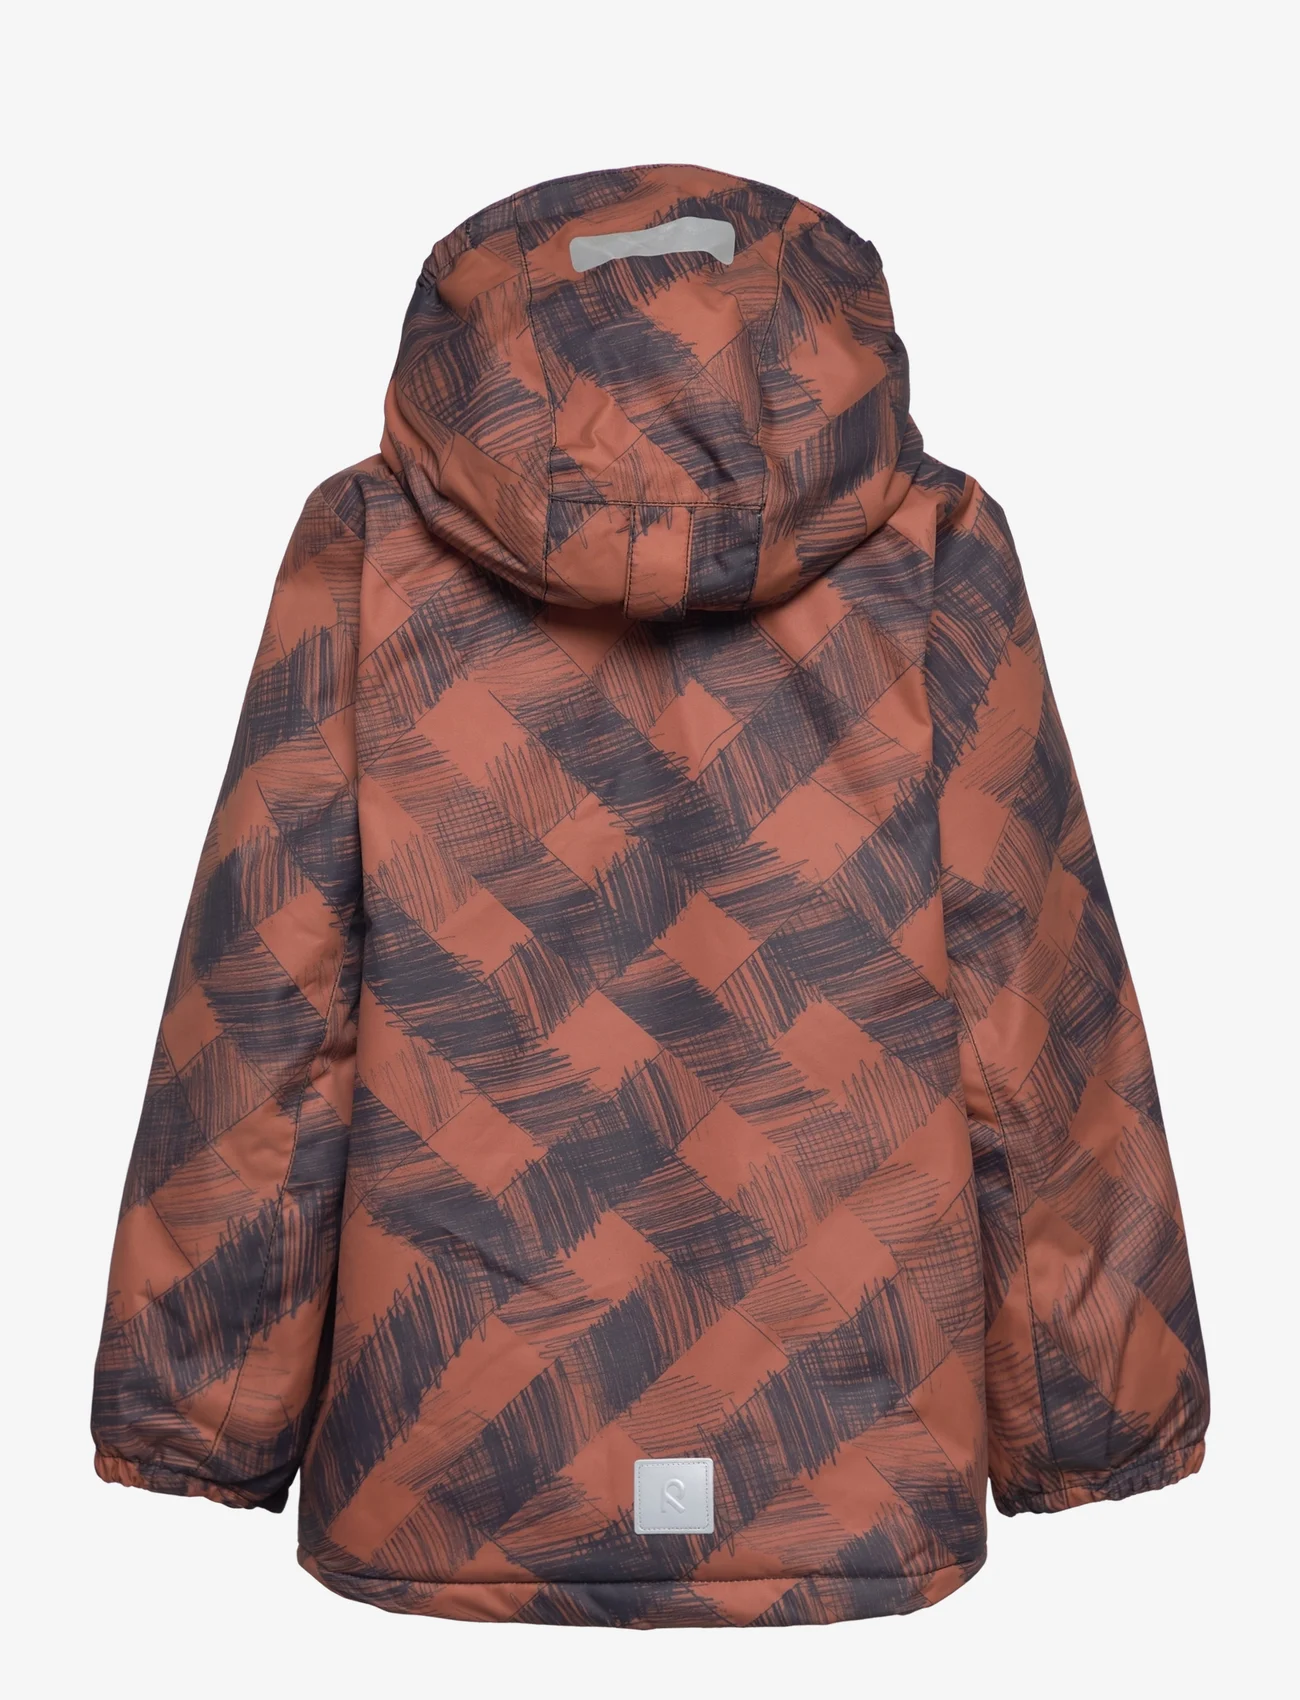 Reima - Winter jacket, Nuotio - vinterjakker - cinnamon brown - 1